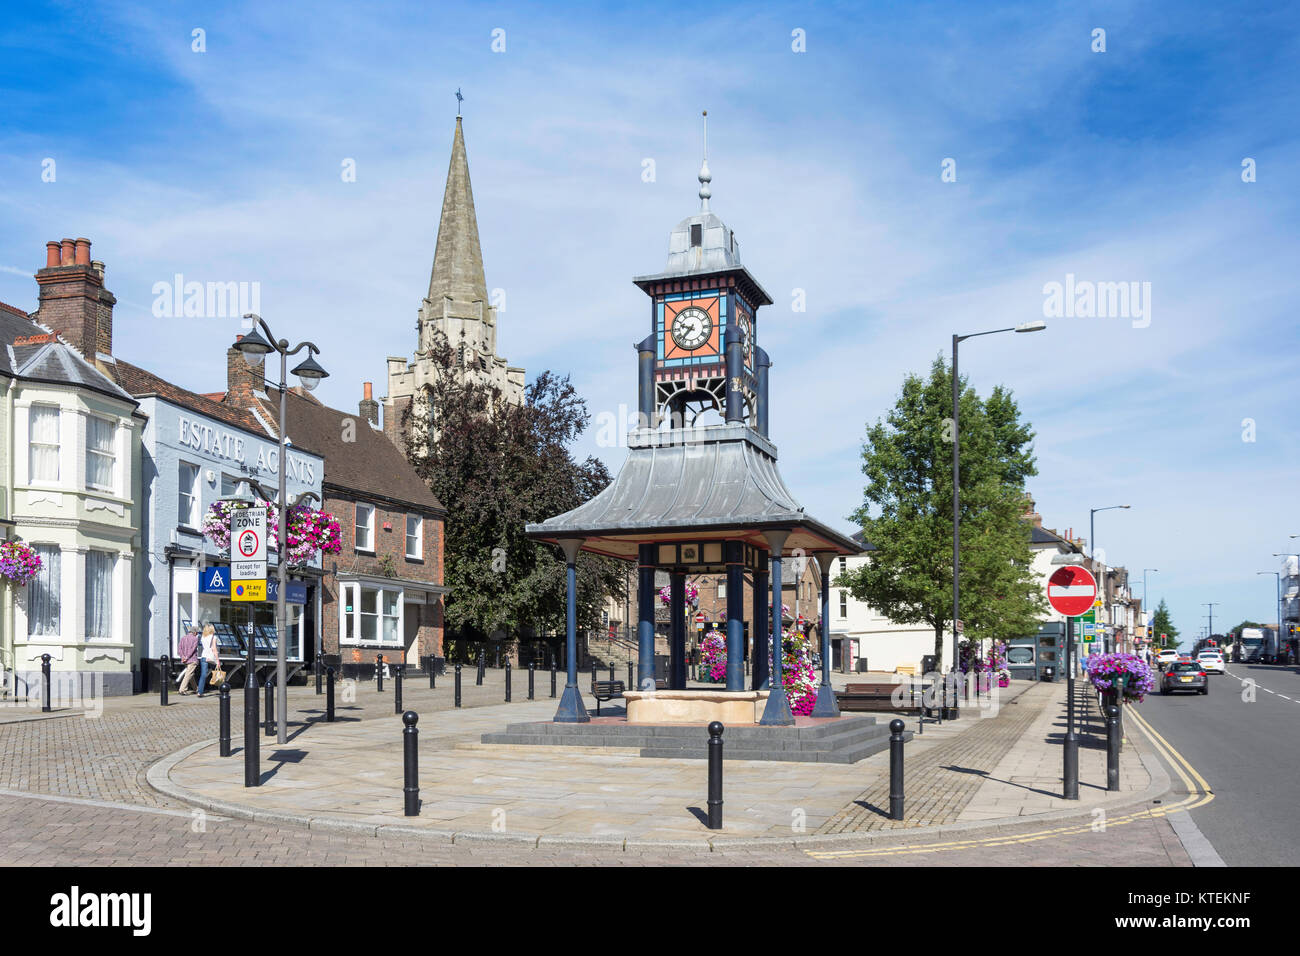 Reloj de mercado e Iglesia Metodista spire, Ashton Square, Dunstable, Bedfordshire, Inglaterra, Reino Unido Foto de stock